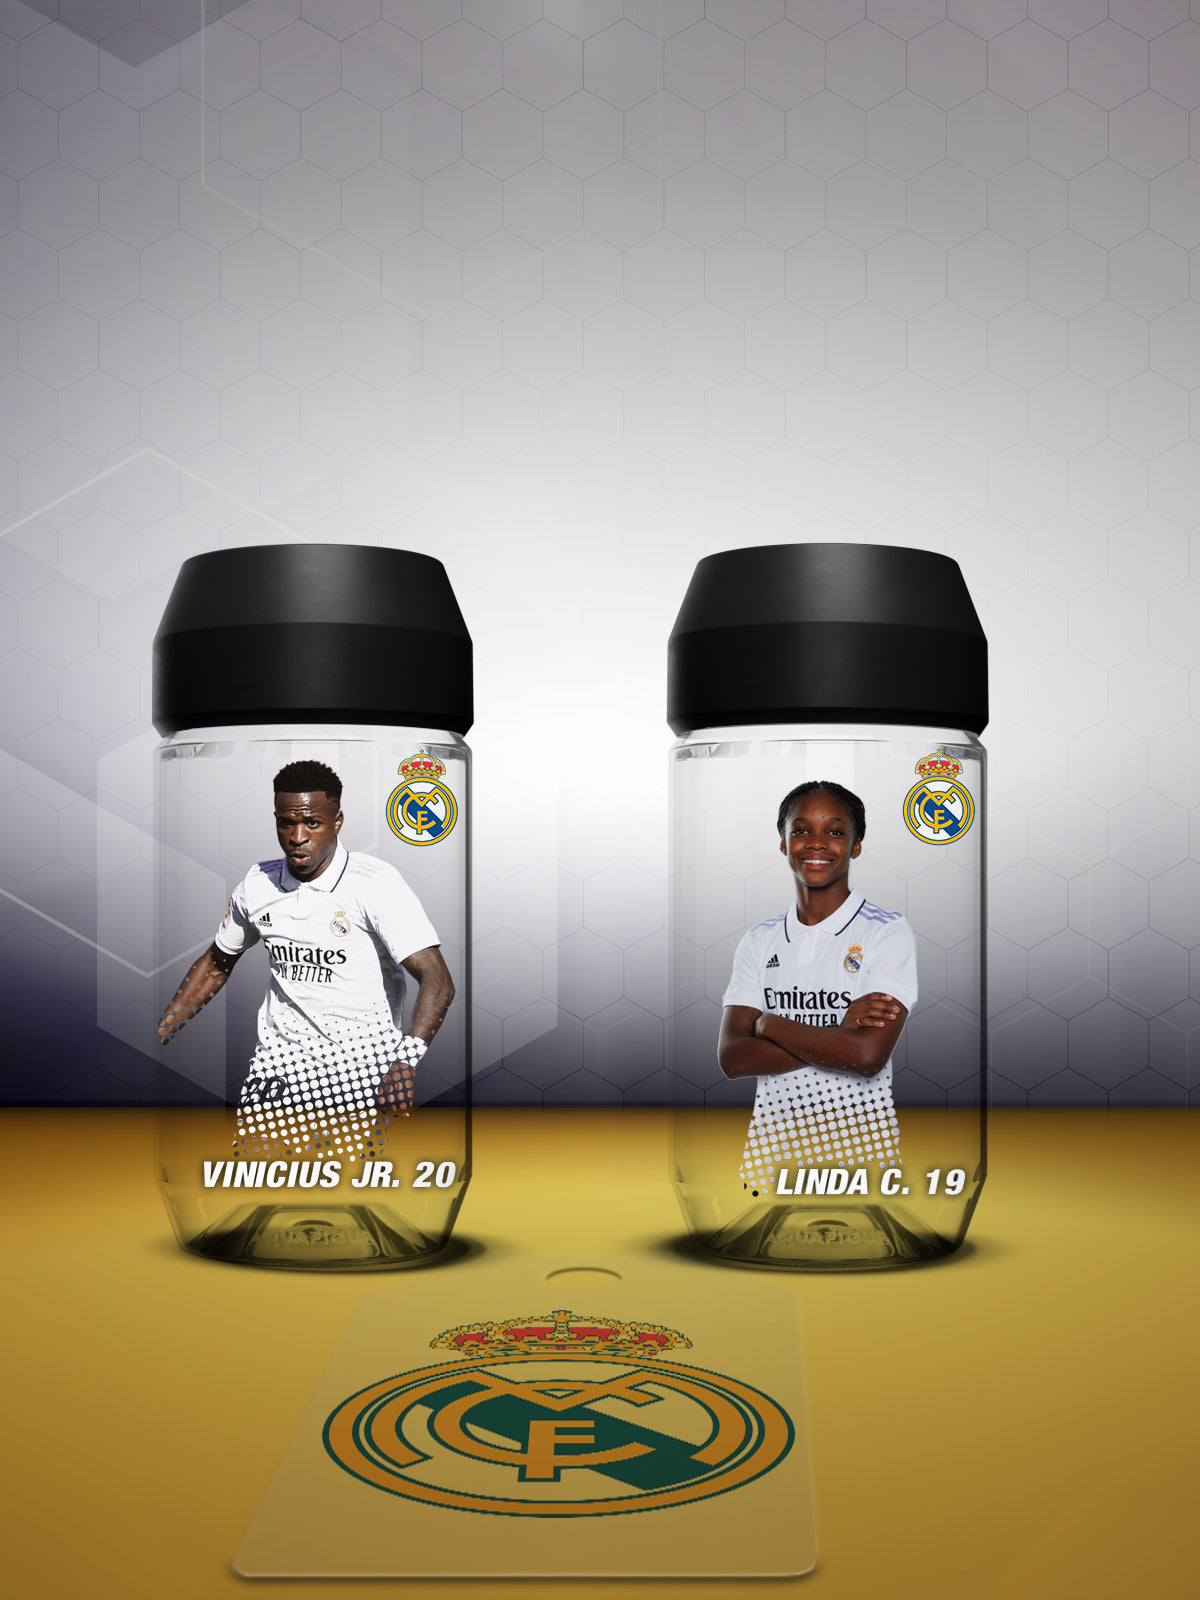 Real Madrid Women's Team - Aquafigure Bottle including 5 Players